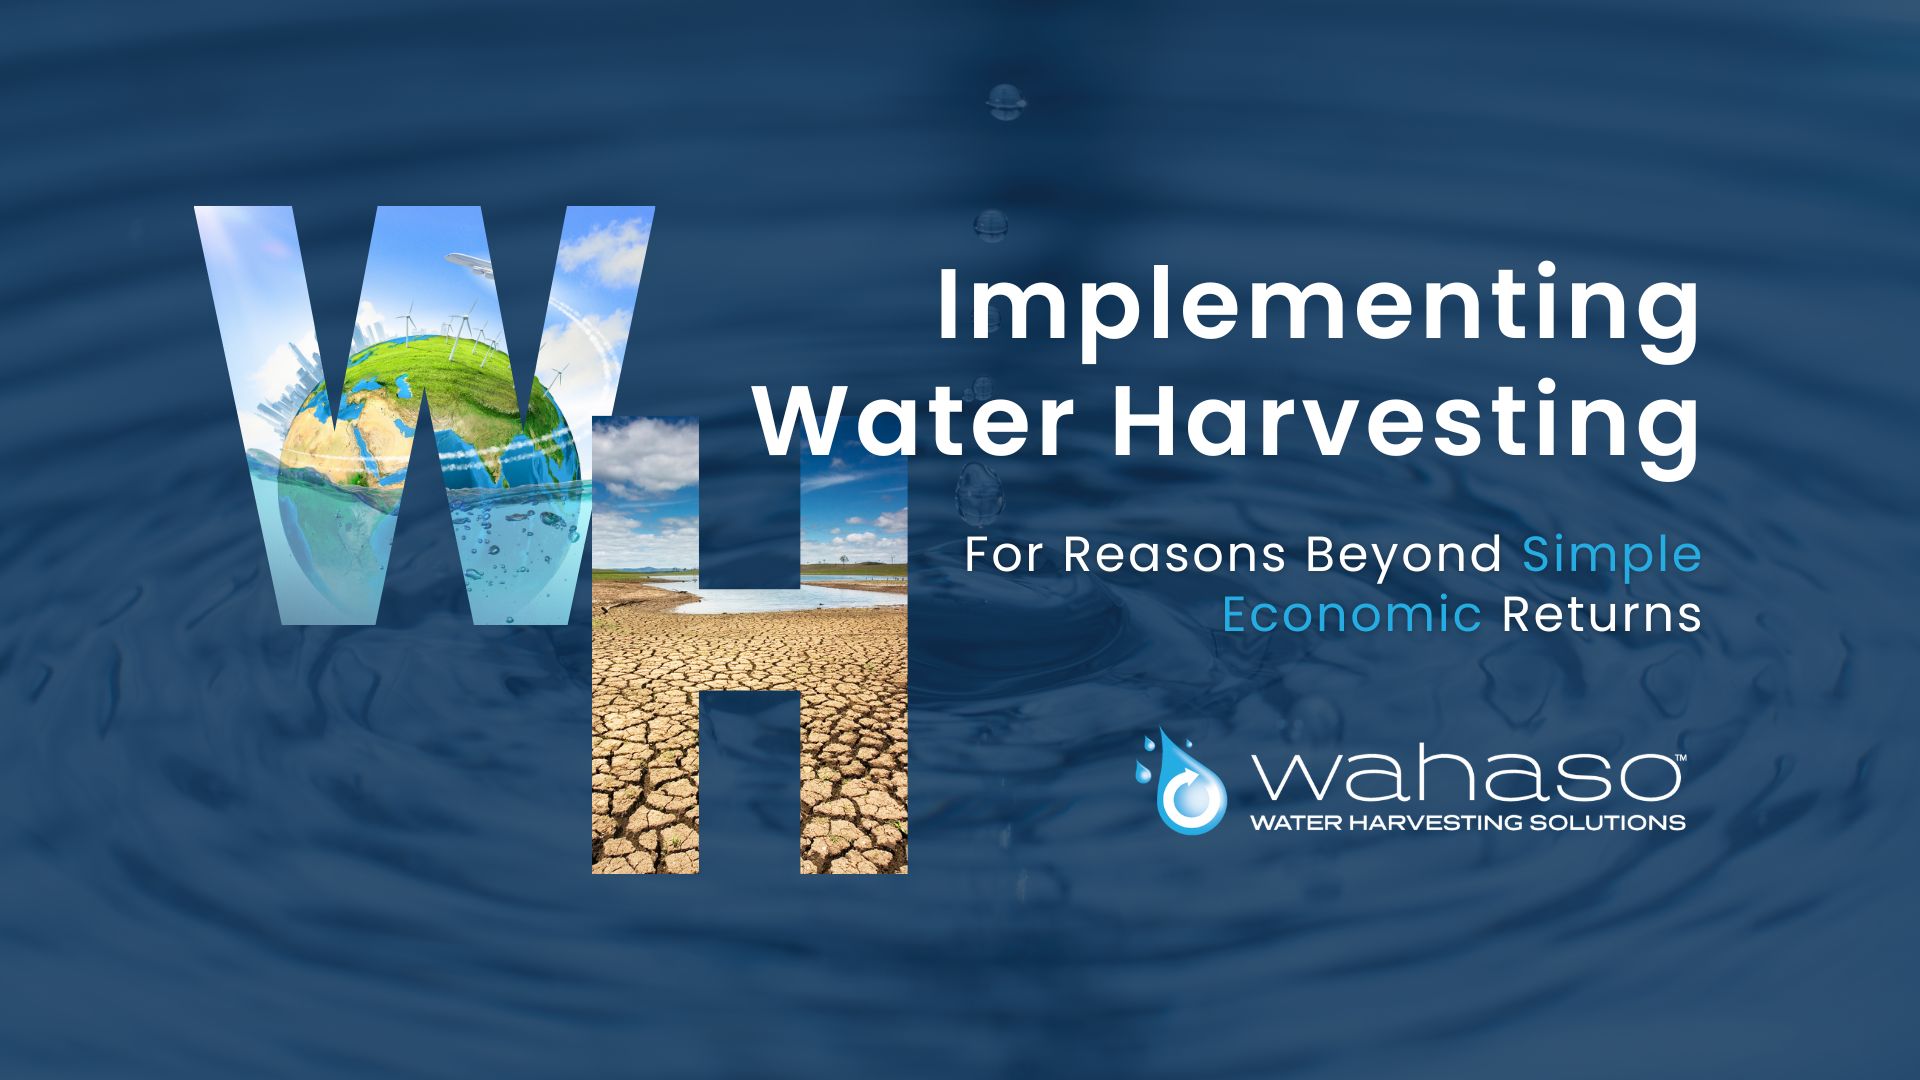 Wahaso Implementing Water Harvesting for Reasons Beyond Simple Economic Returns